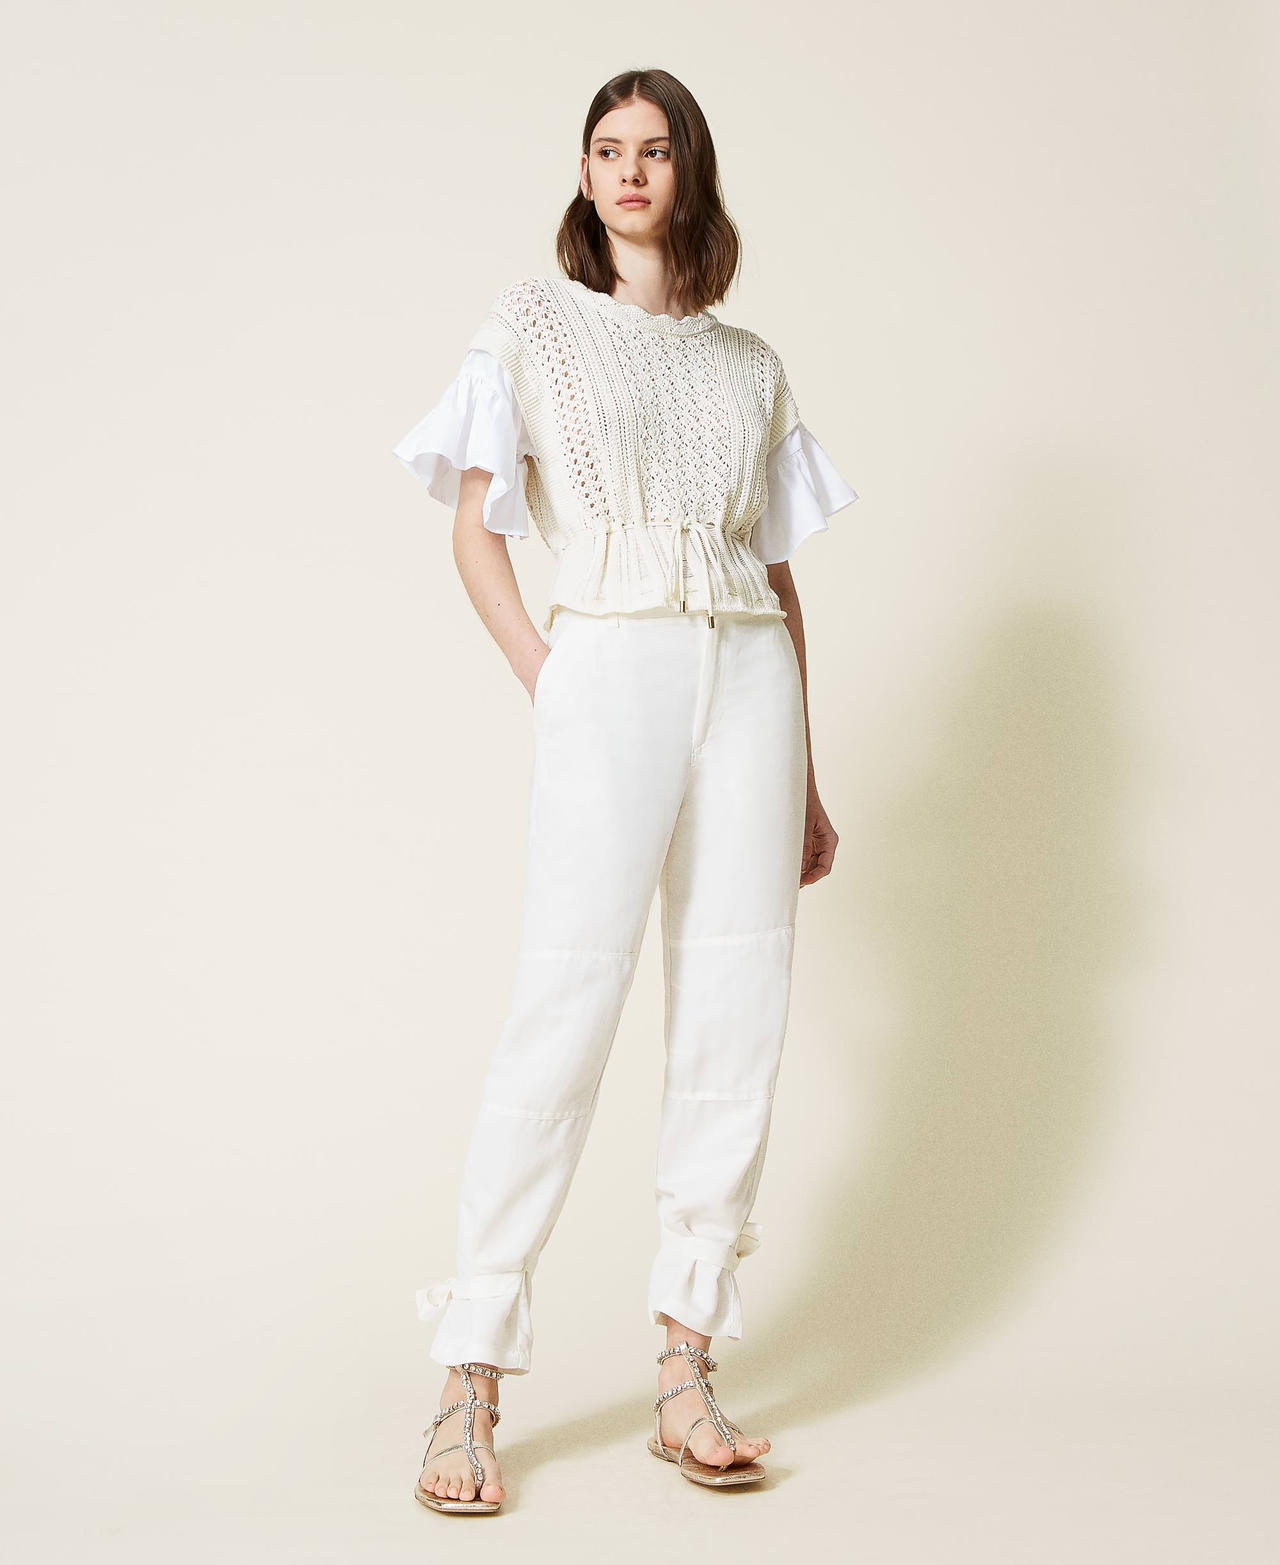 Linen blend twill trousers Lily Woman 221TT2195-02